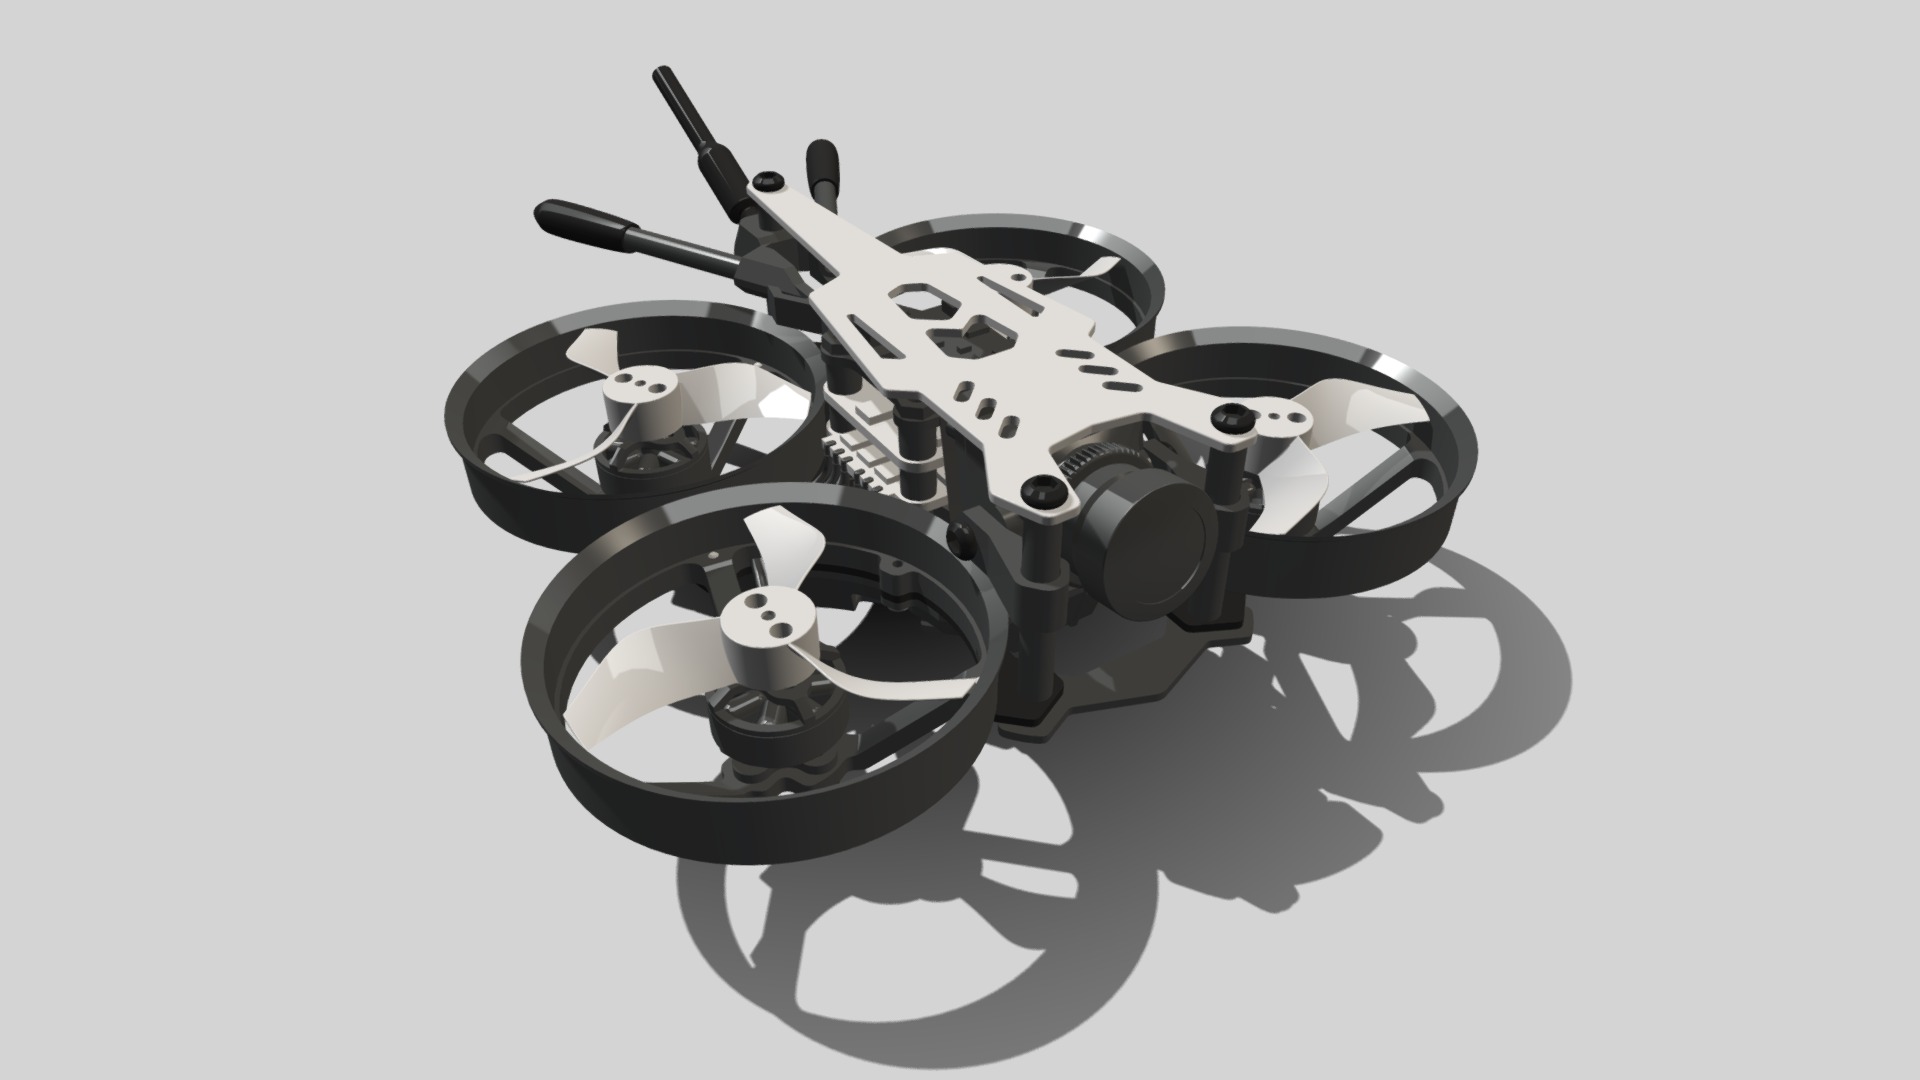 3D model Bionic dragonfly four-axis UAV aircraft - This is a 3D model of the Bionic dragonfly four-axis UAV aircraft. The 3D model is about a black and white steering wheel.